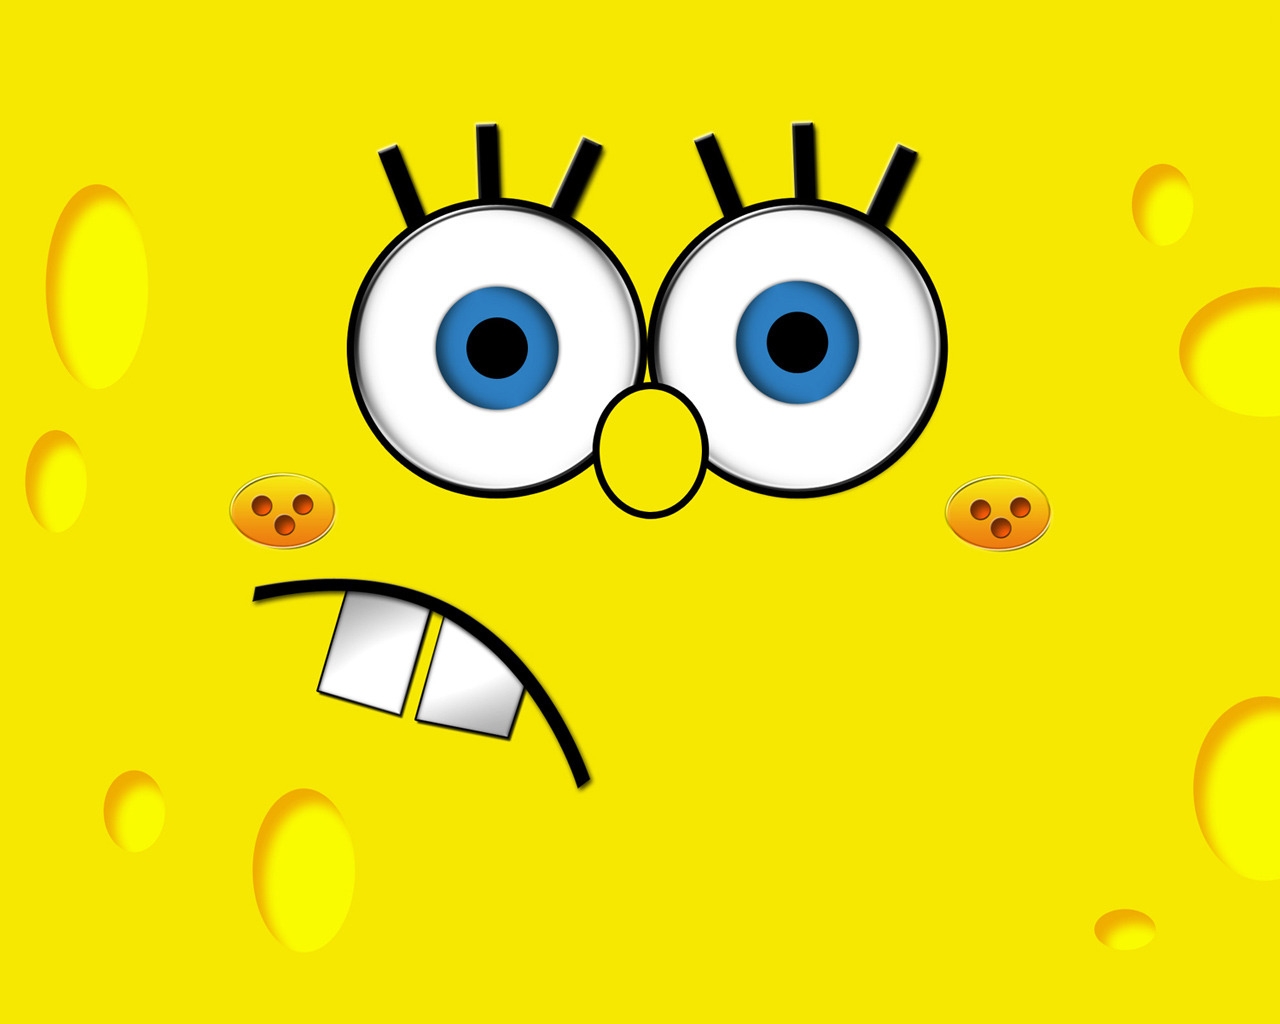 SpongeBob for 1280 x 1024 resolution